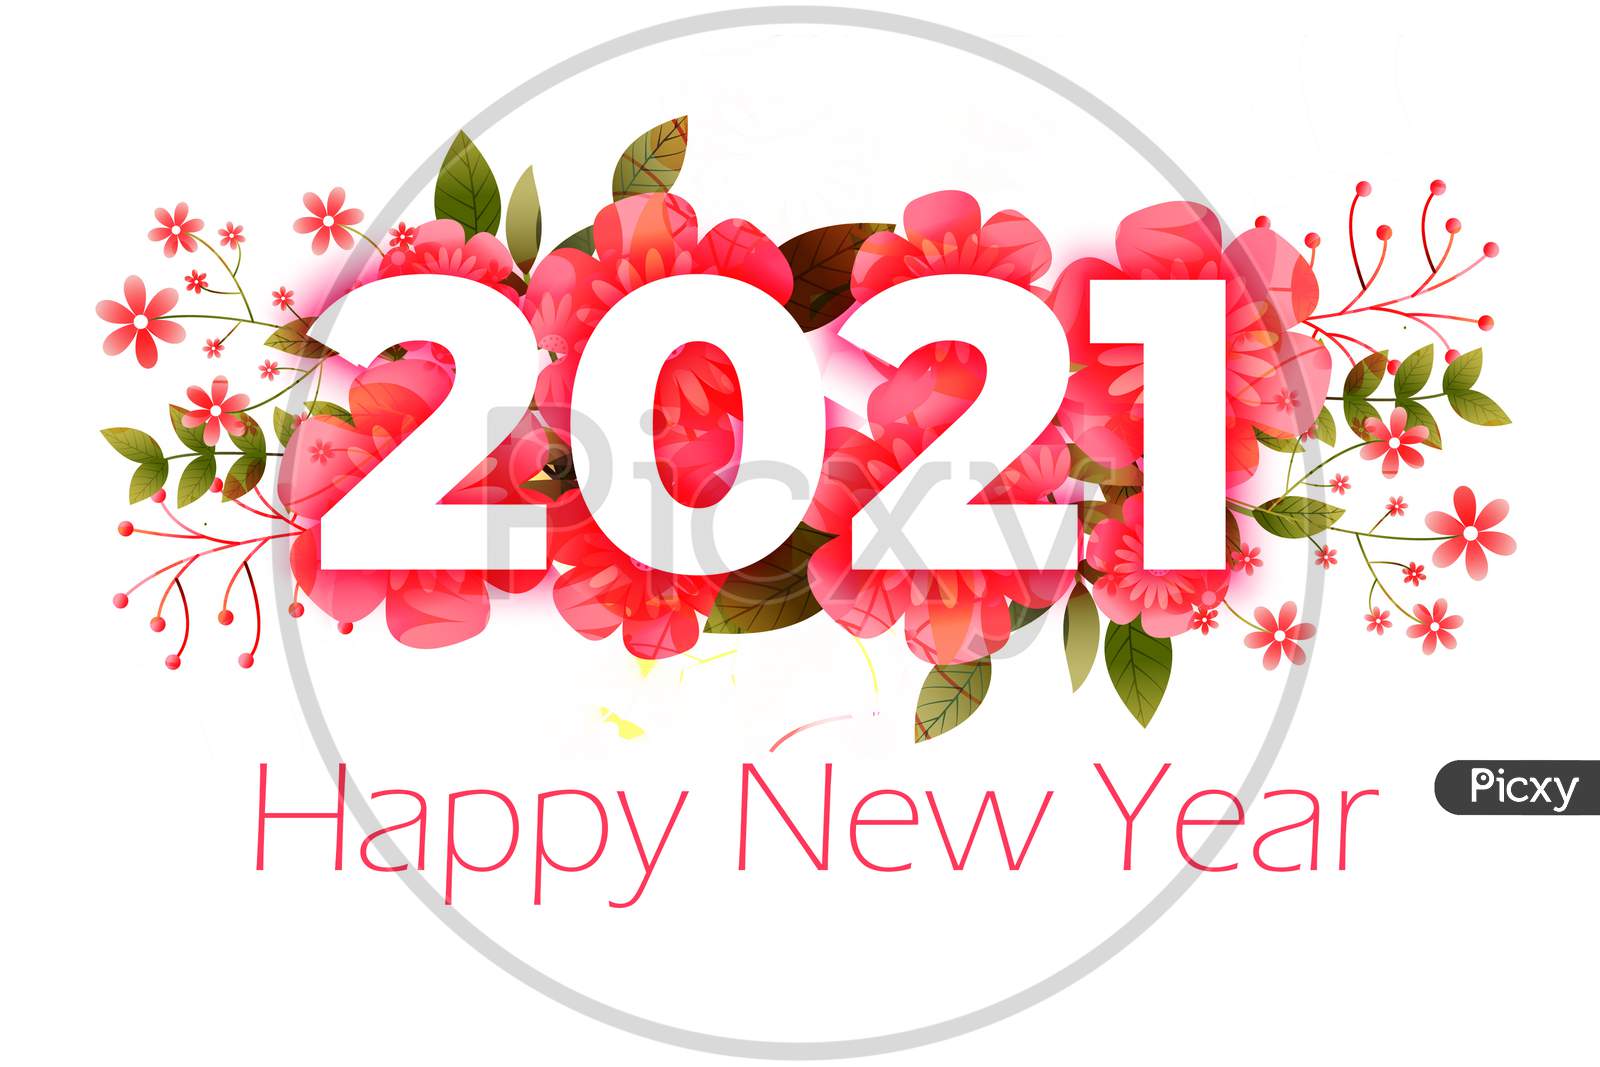 A Happy New Year 2021 Card